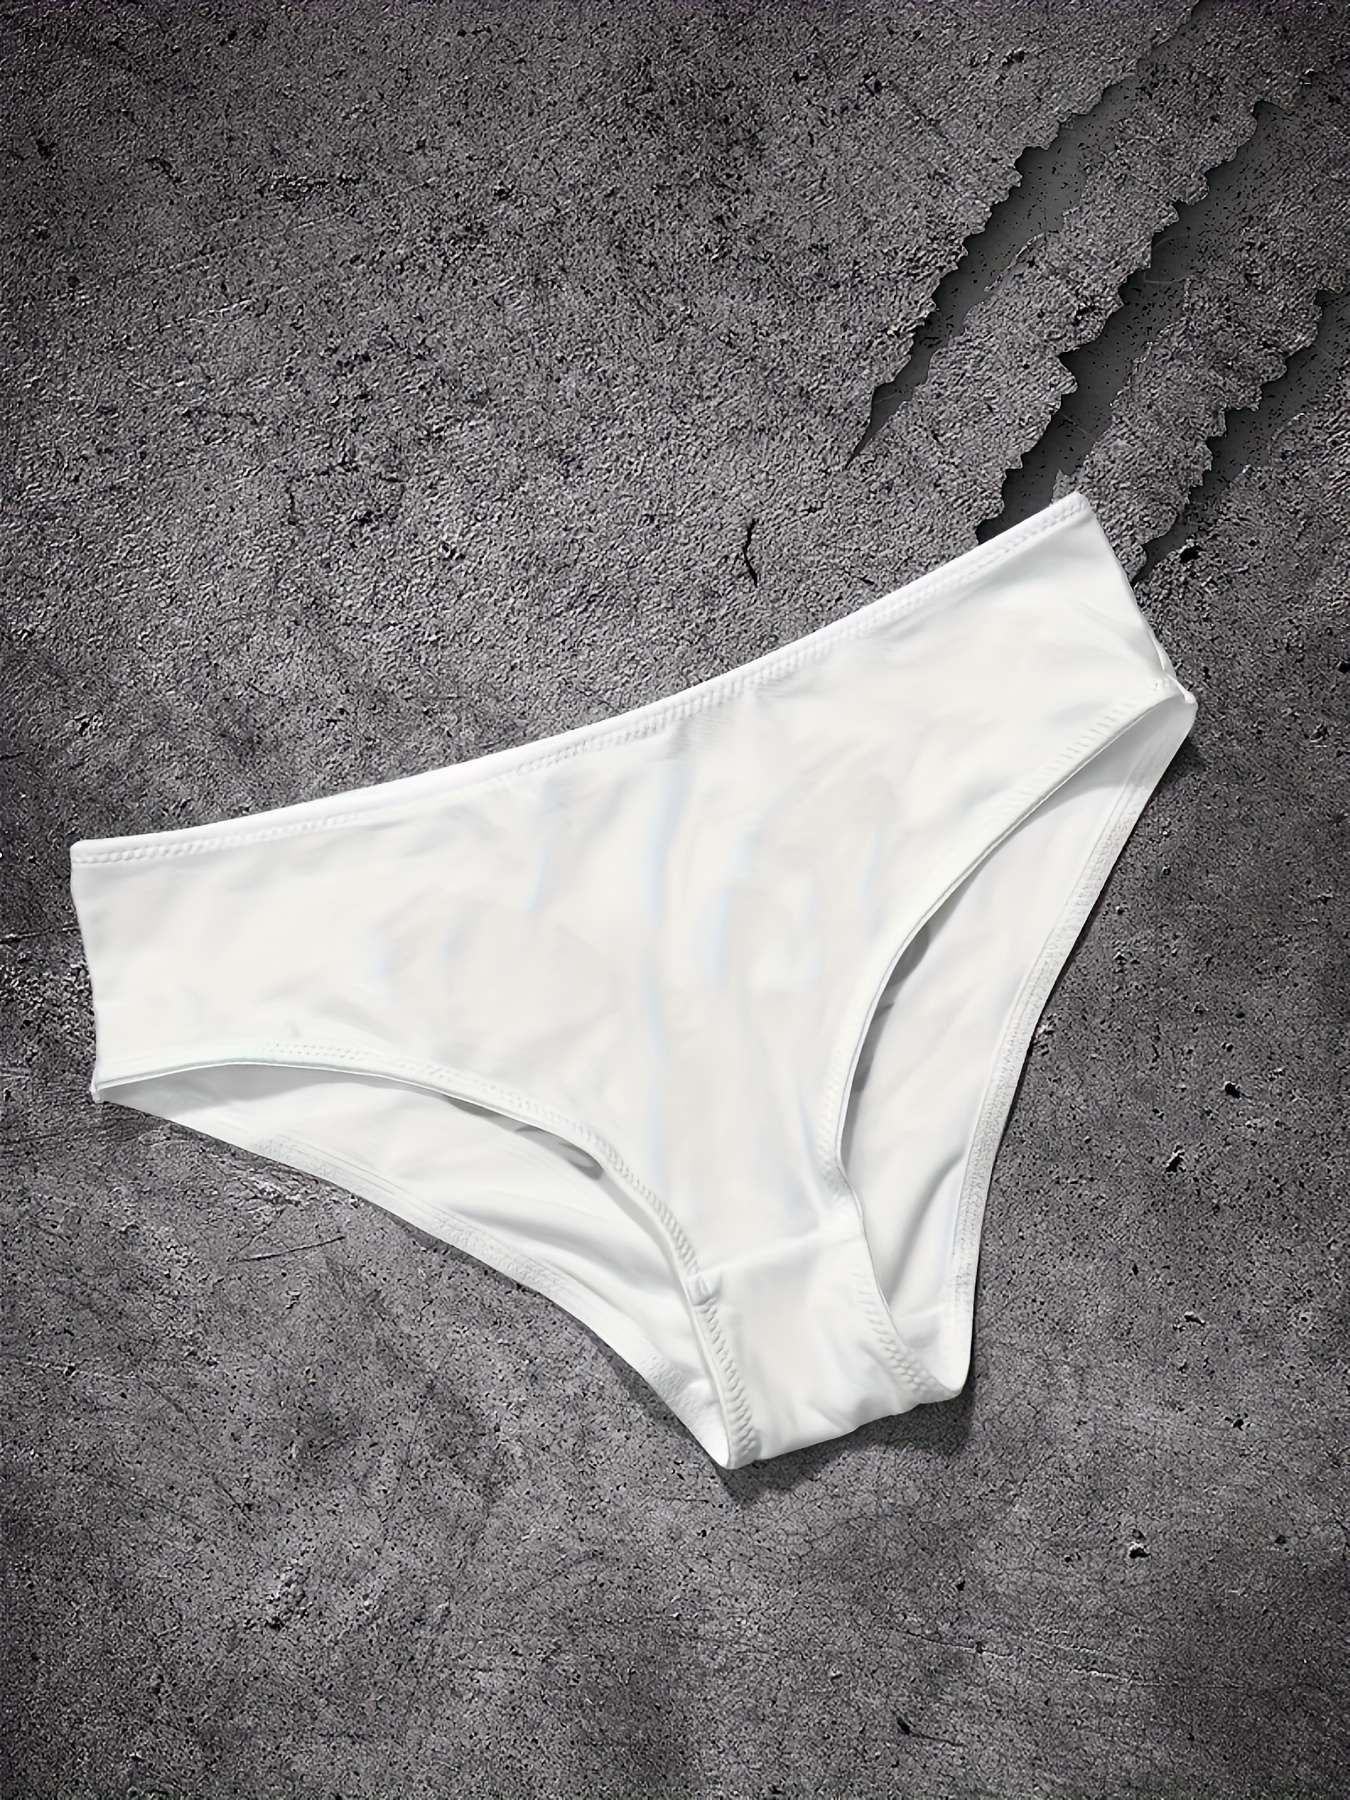 Spyder Briefs Cotton Underwear Multicolored reviews and…